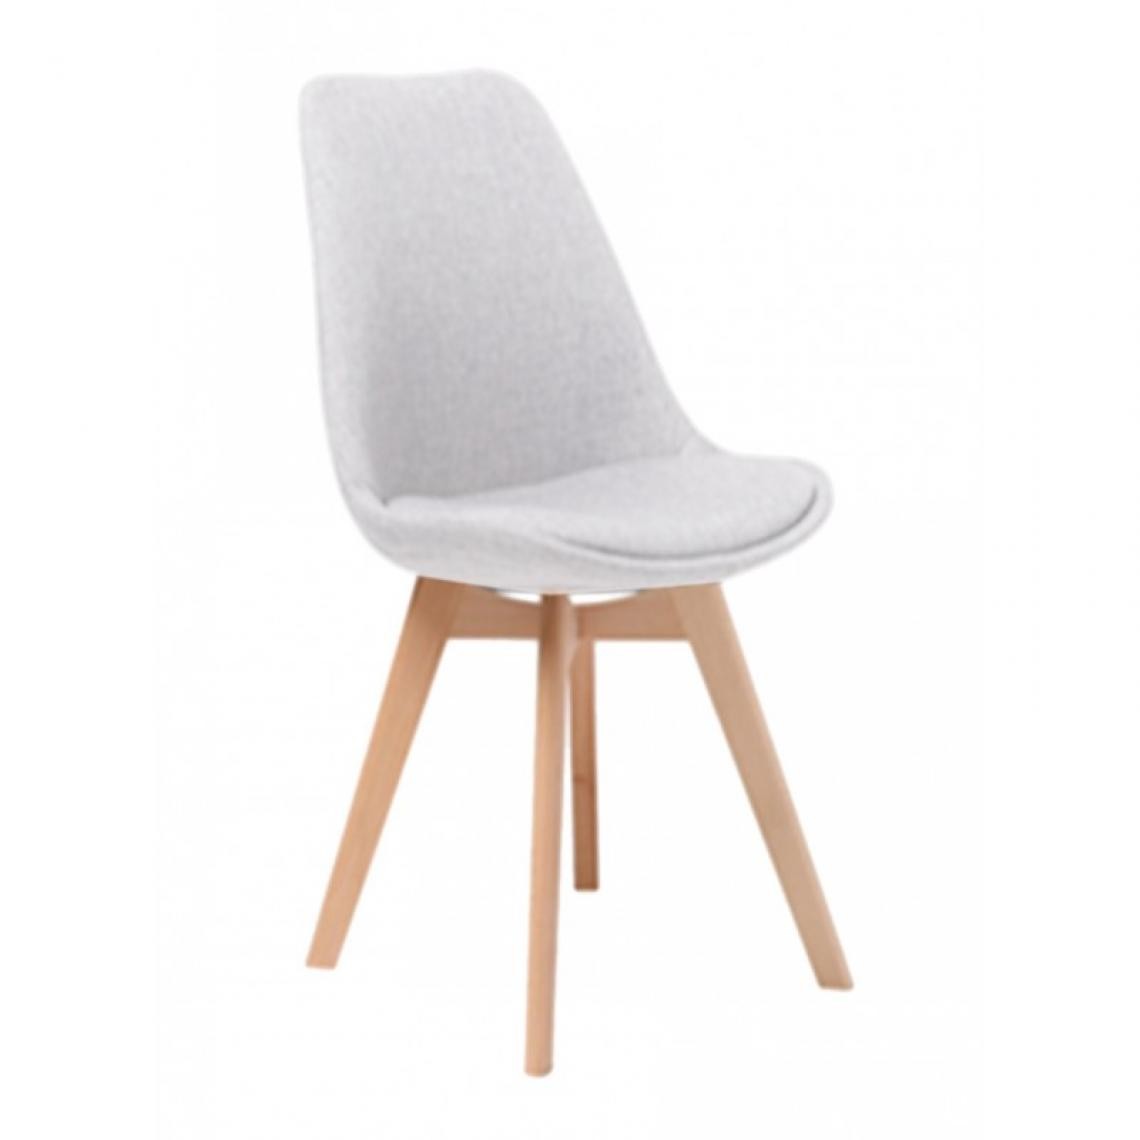 Webmarketpoint - Chaise blanche de bureau design moderne tissu cm 54 x 48 x 84 h - Chaises